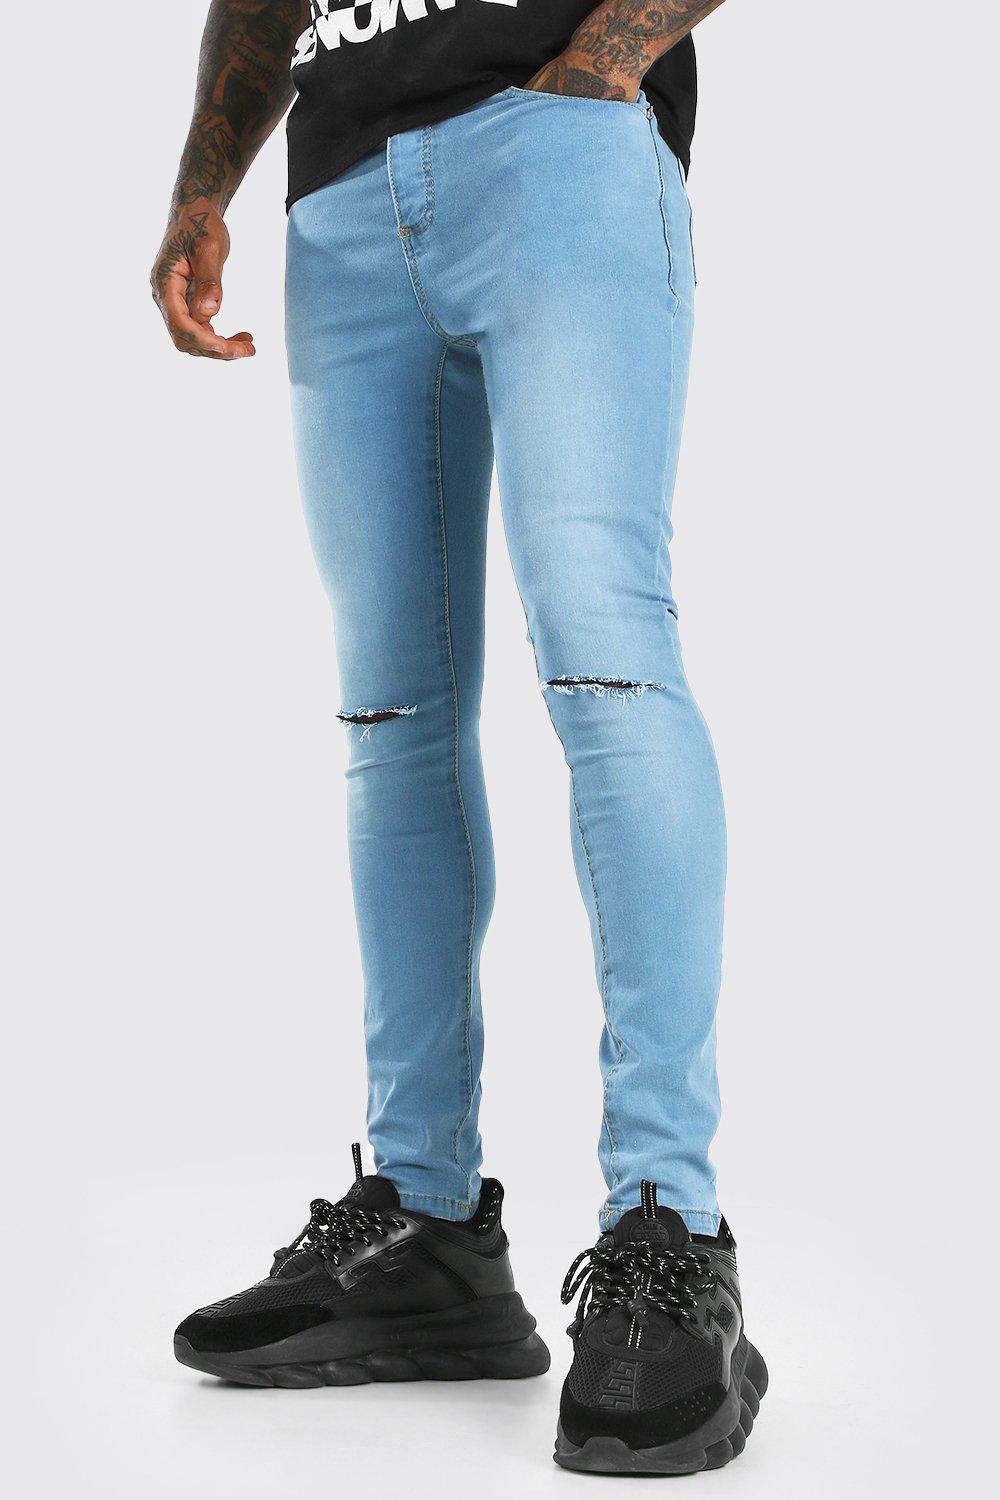 mens skinny jeans ireland